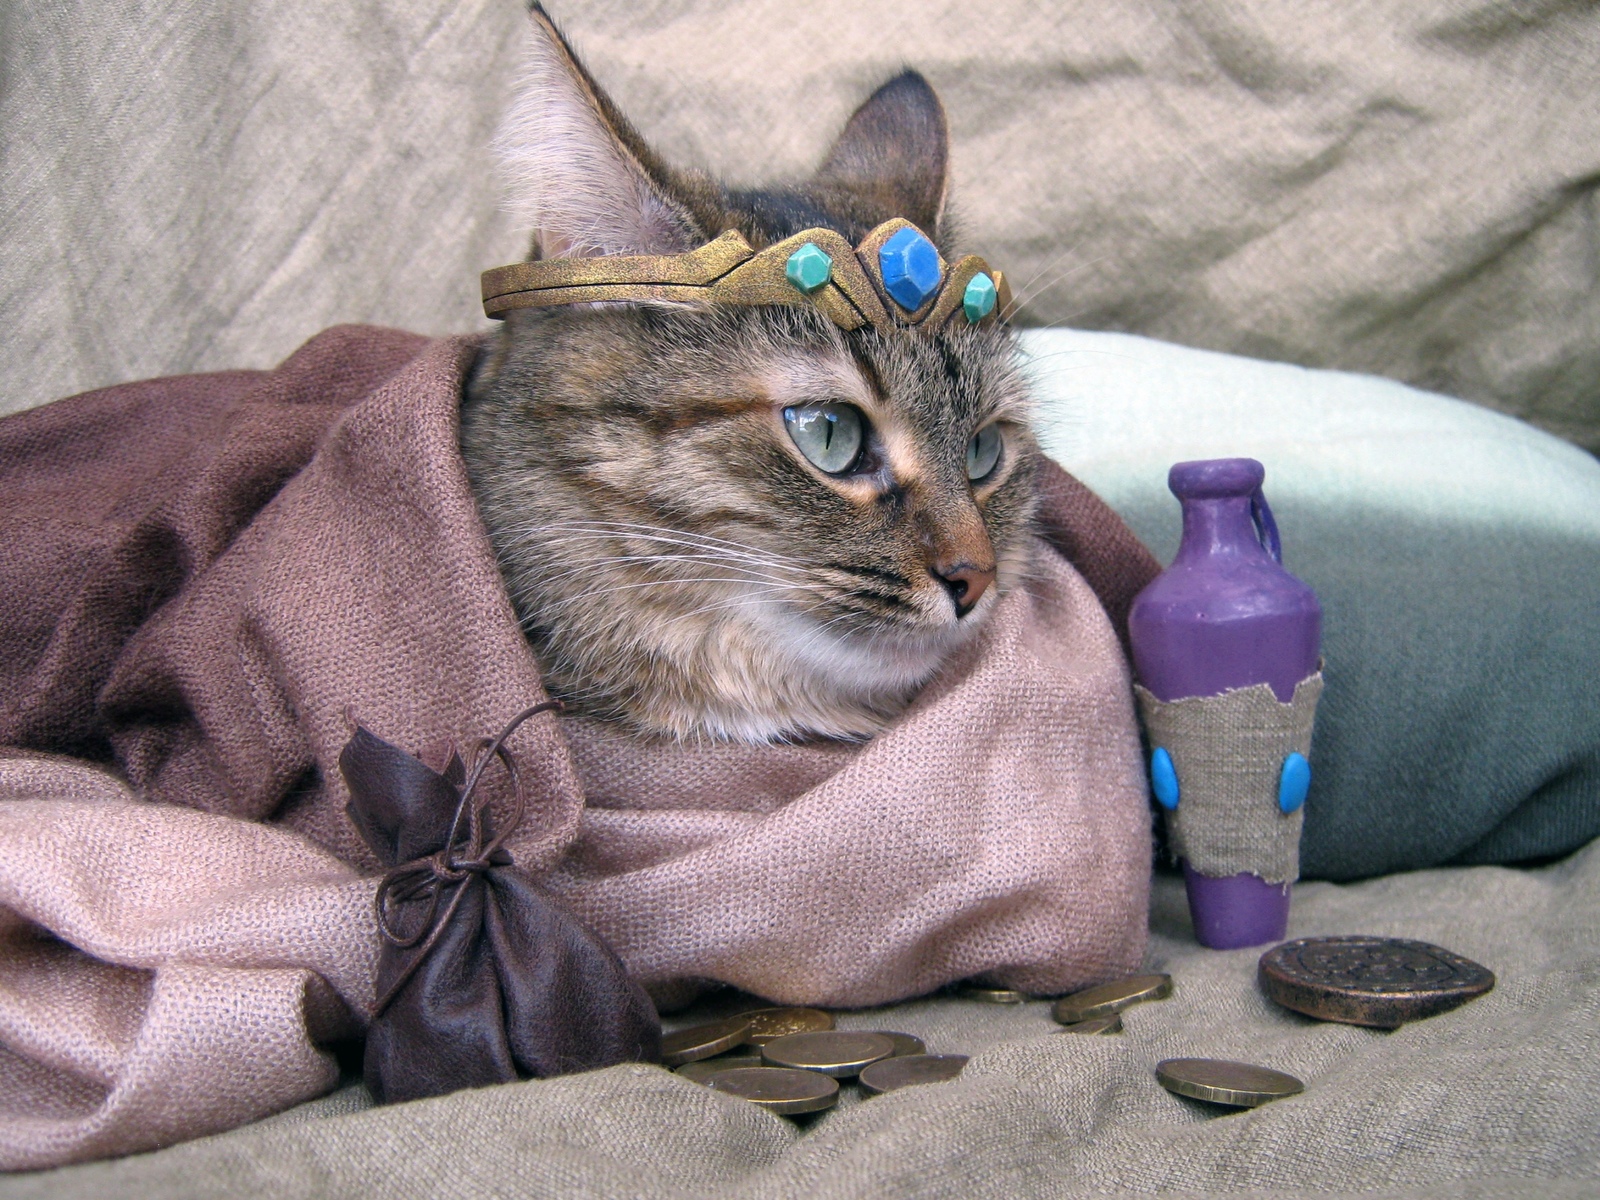 The Khajiit has merchandise if you have coins, friend! - cat, Khajiit, The elder scrolls, Cosplay, Longpost